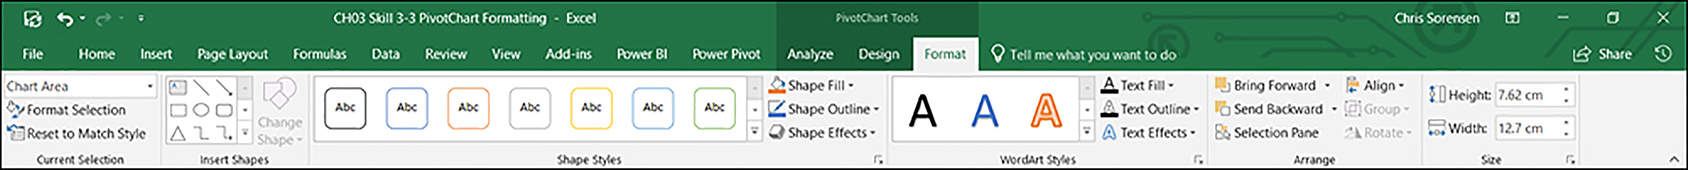 PivotChart Tools Format tab.